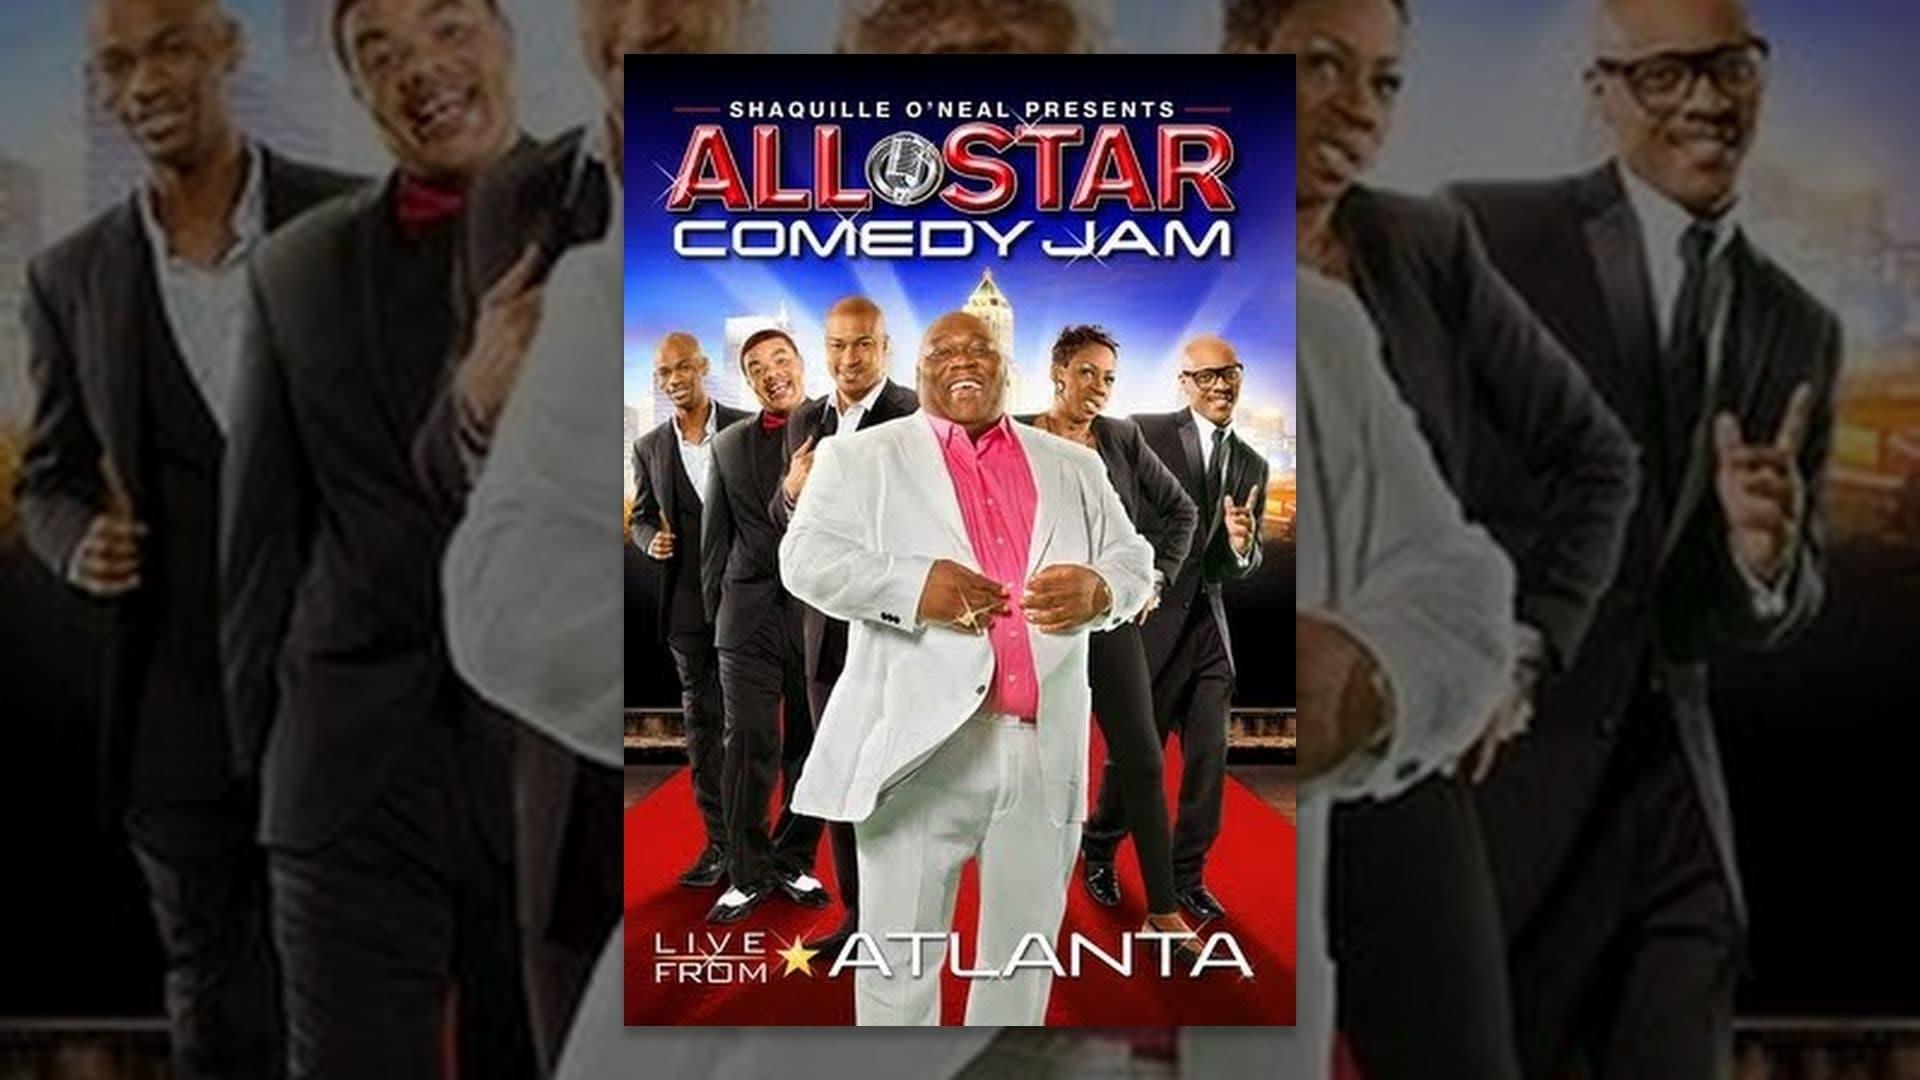 All Star Comedy Jam: Live from Atlanta backdrop